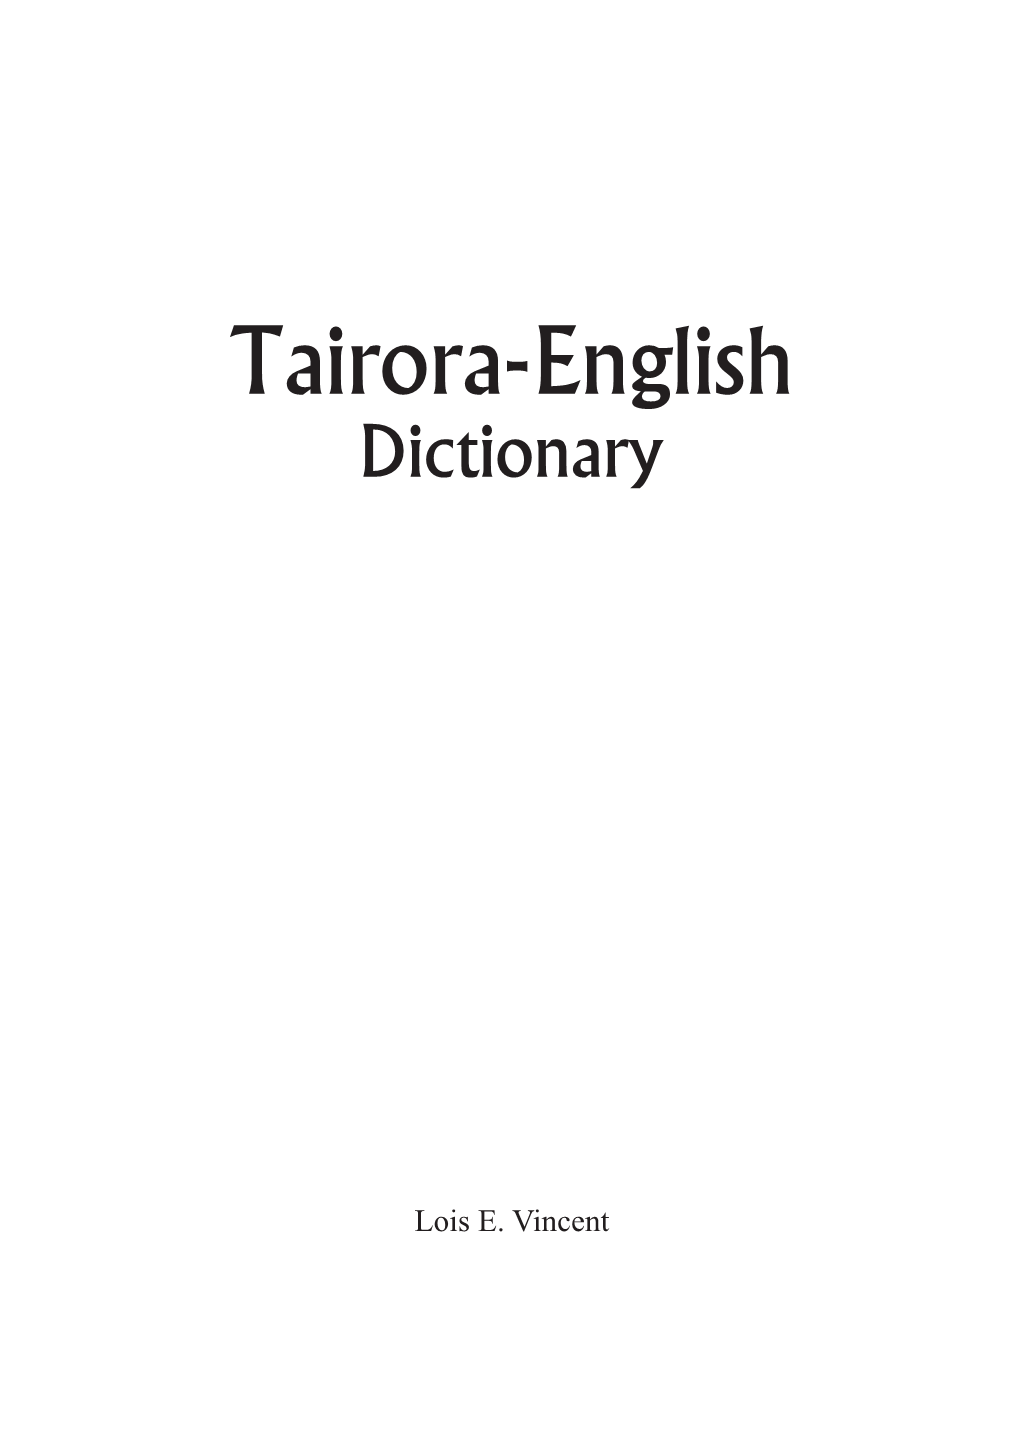 Tairora-English Dictionary